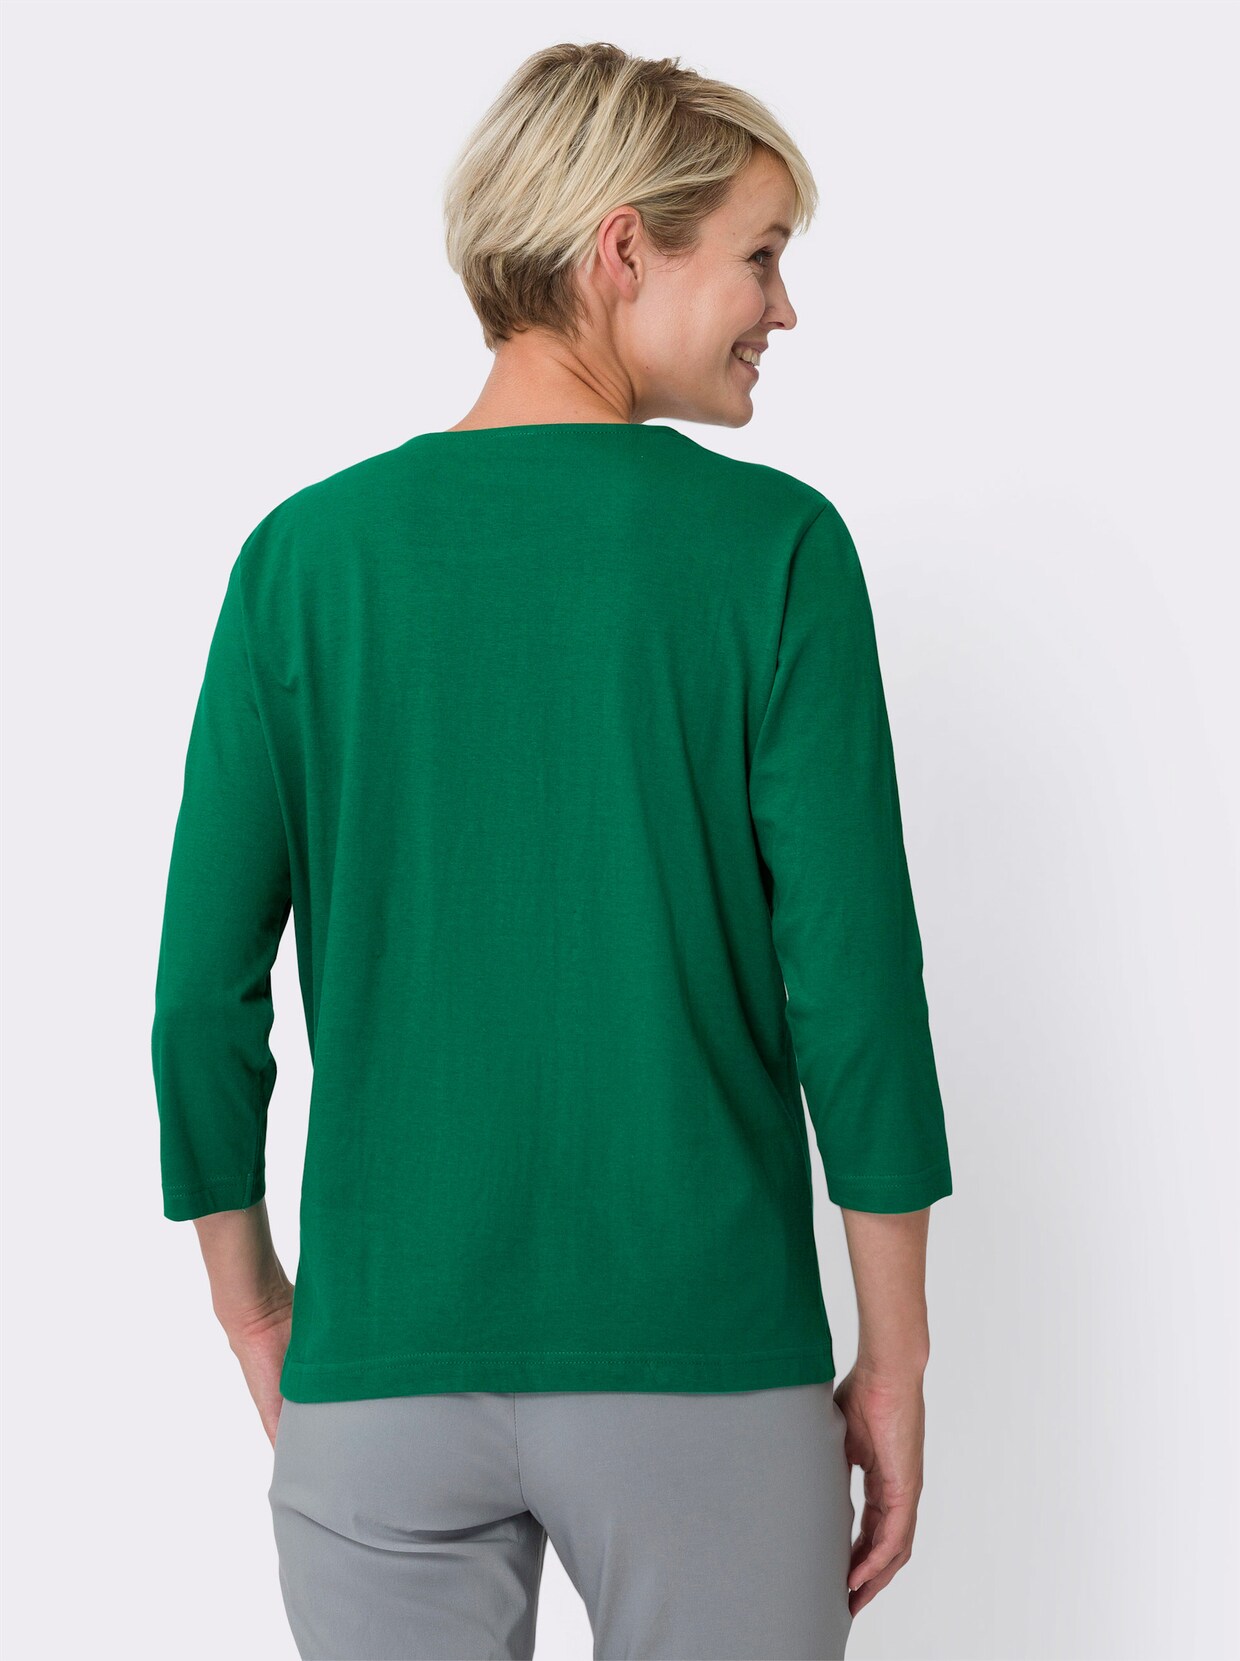 2-in-1-Shirt - grün-marine